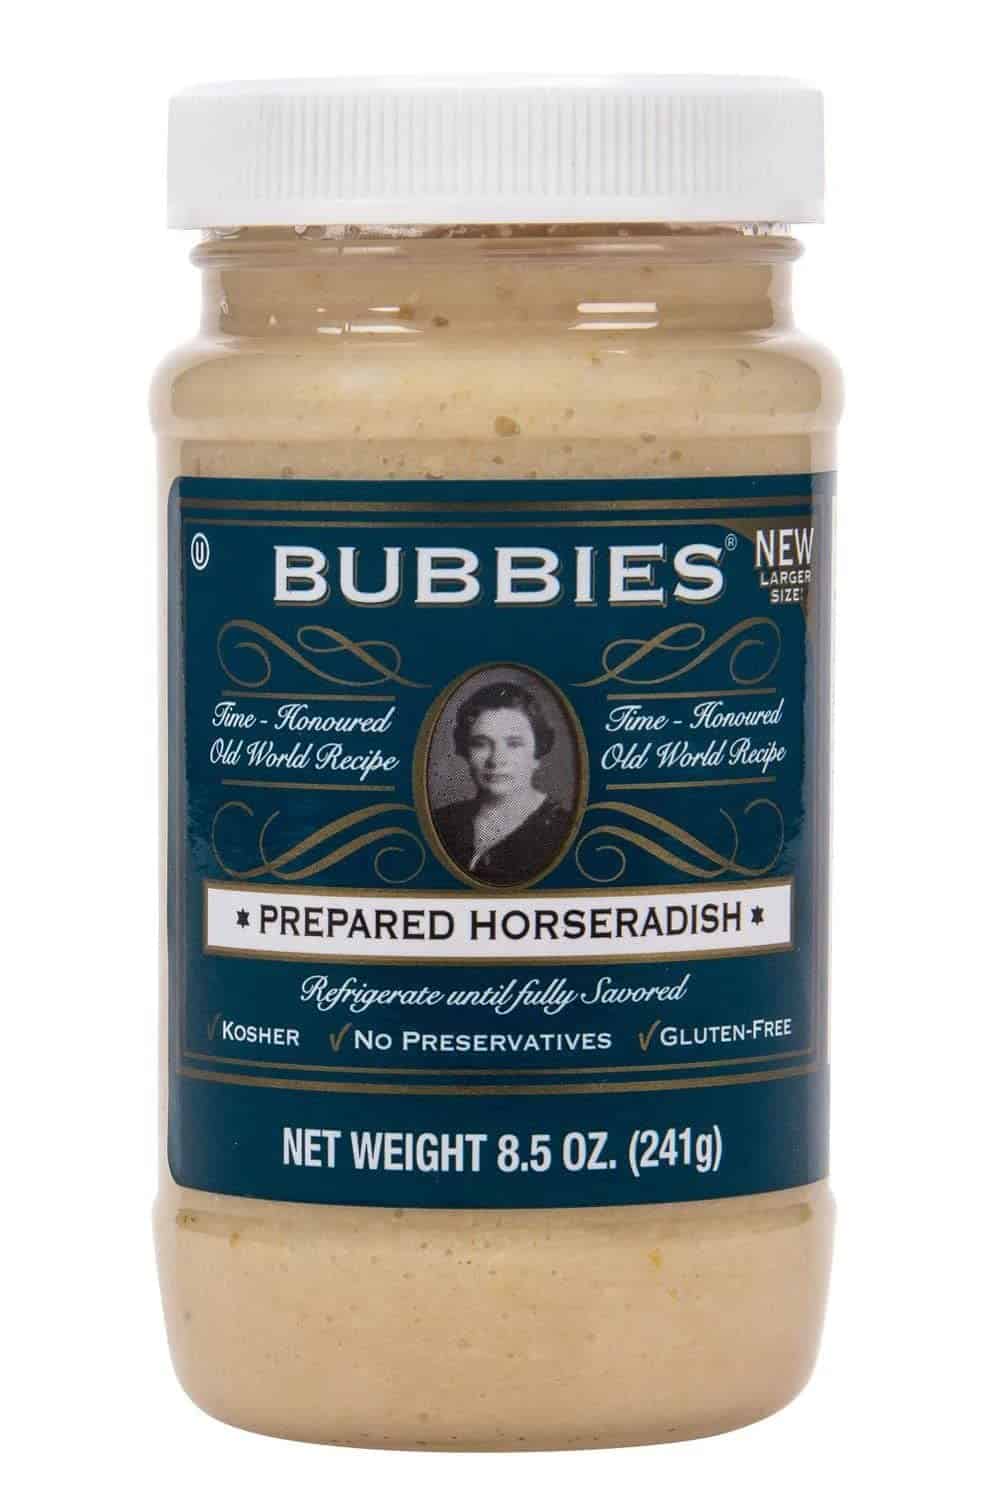 Horseradish sauce (or prepared horseradish) as a substitute for mustard powder